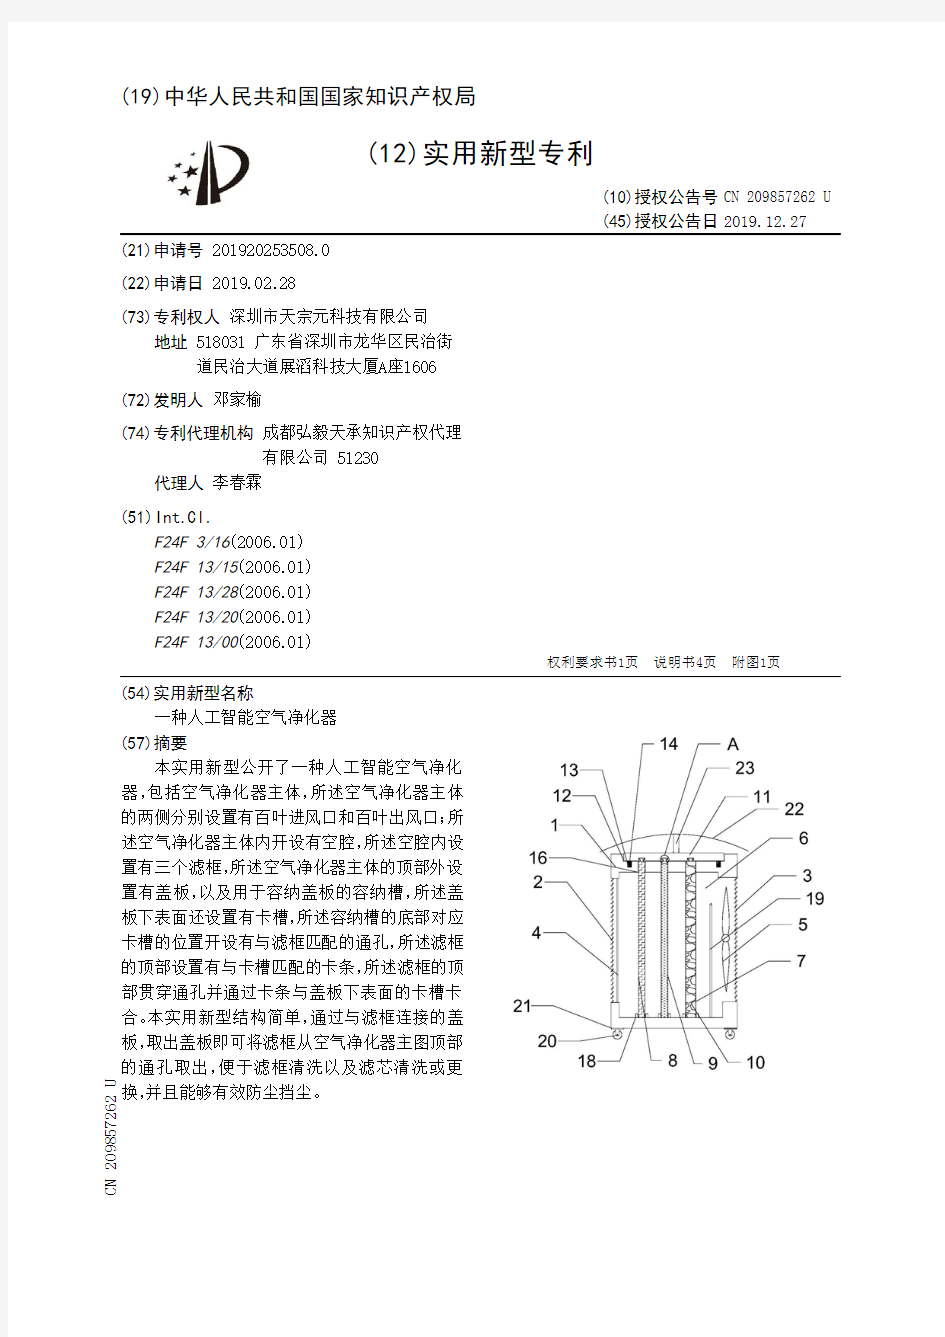 【CN209857262U】一种人工智能空气净化器【专利】